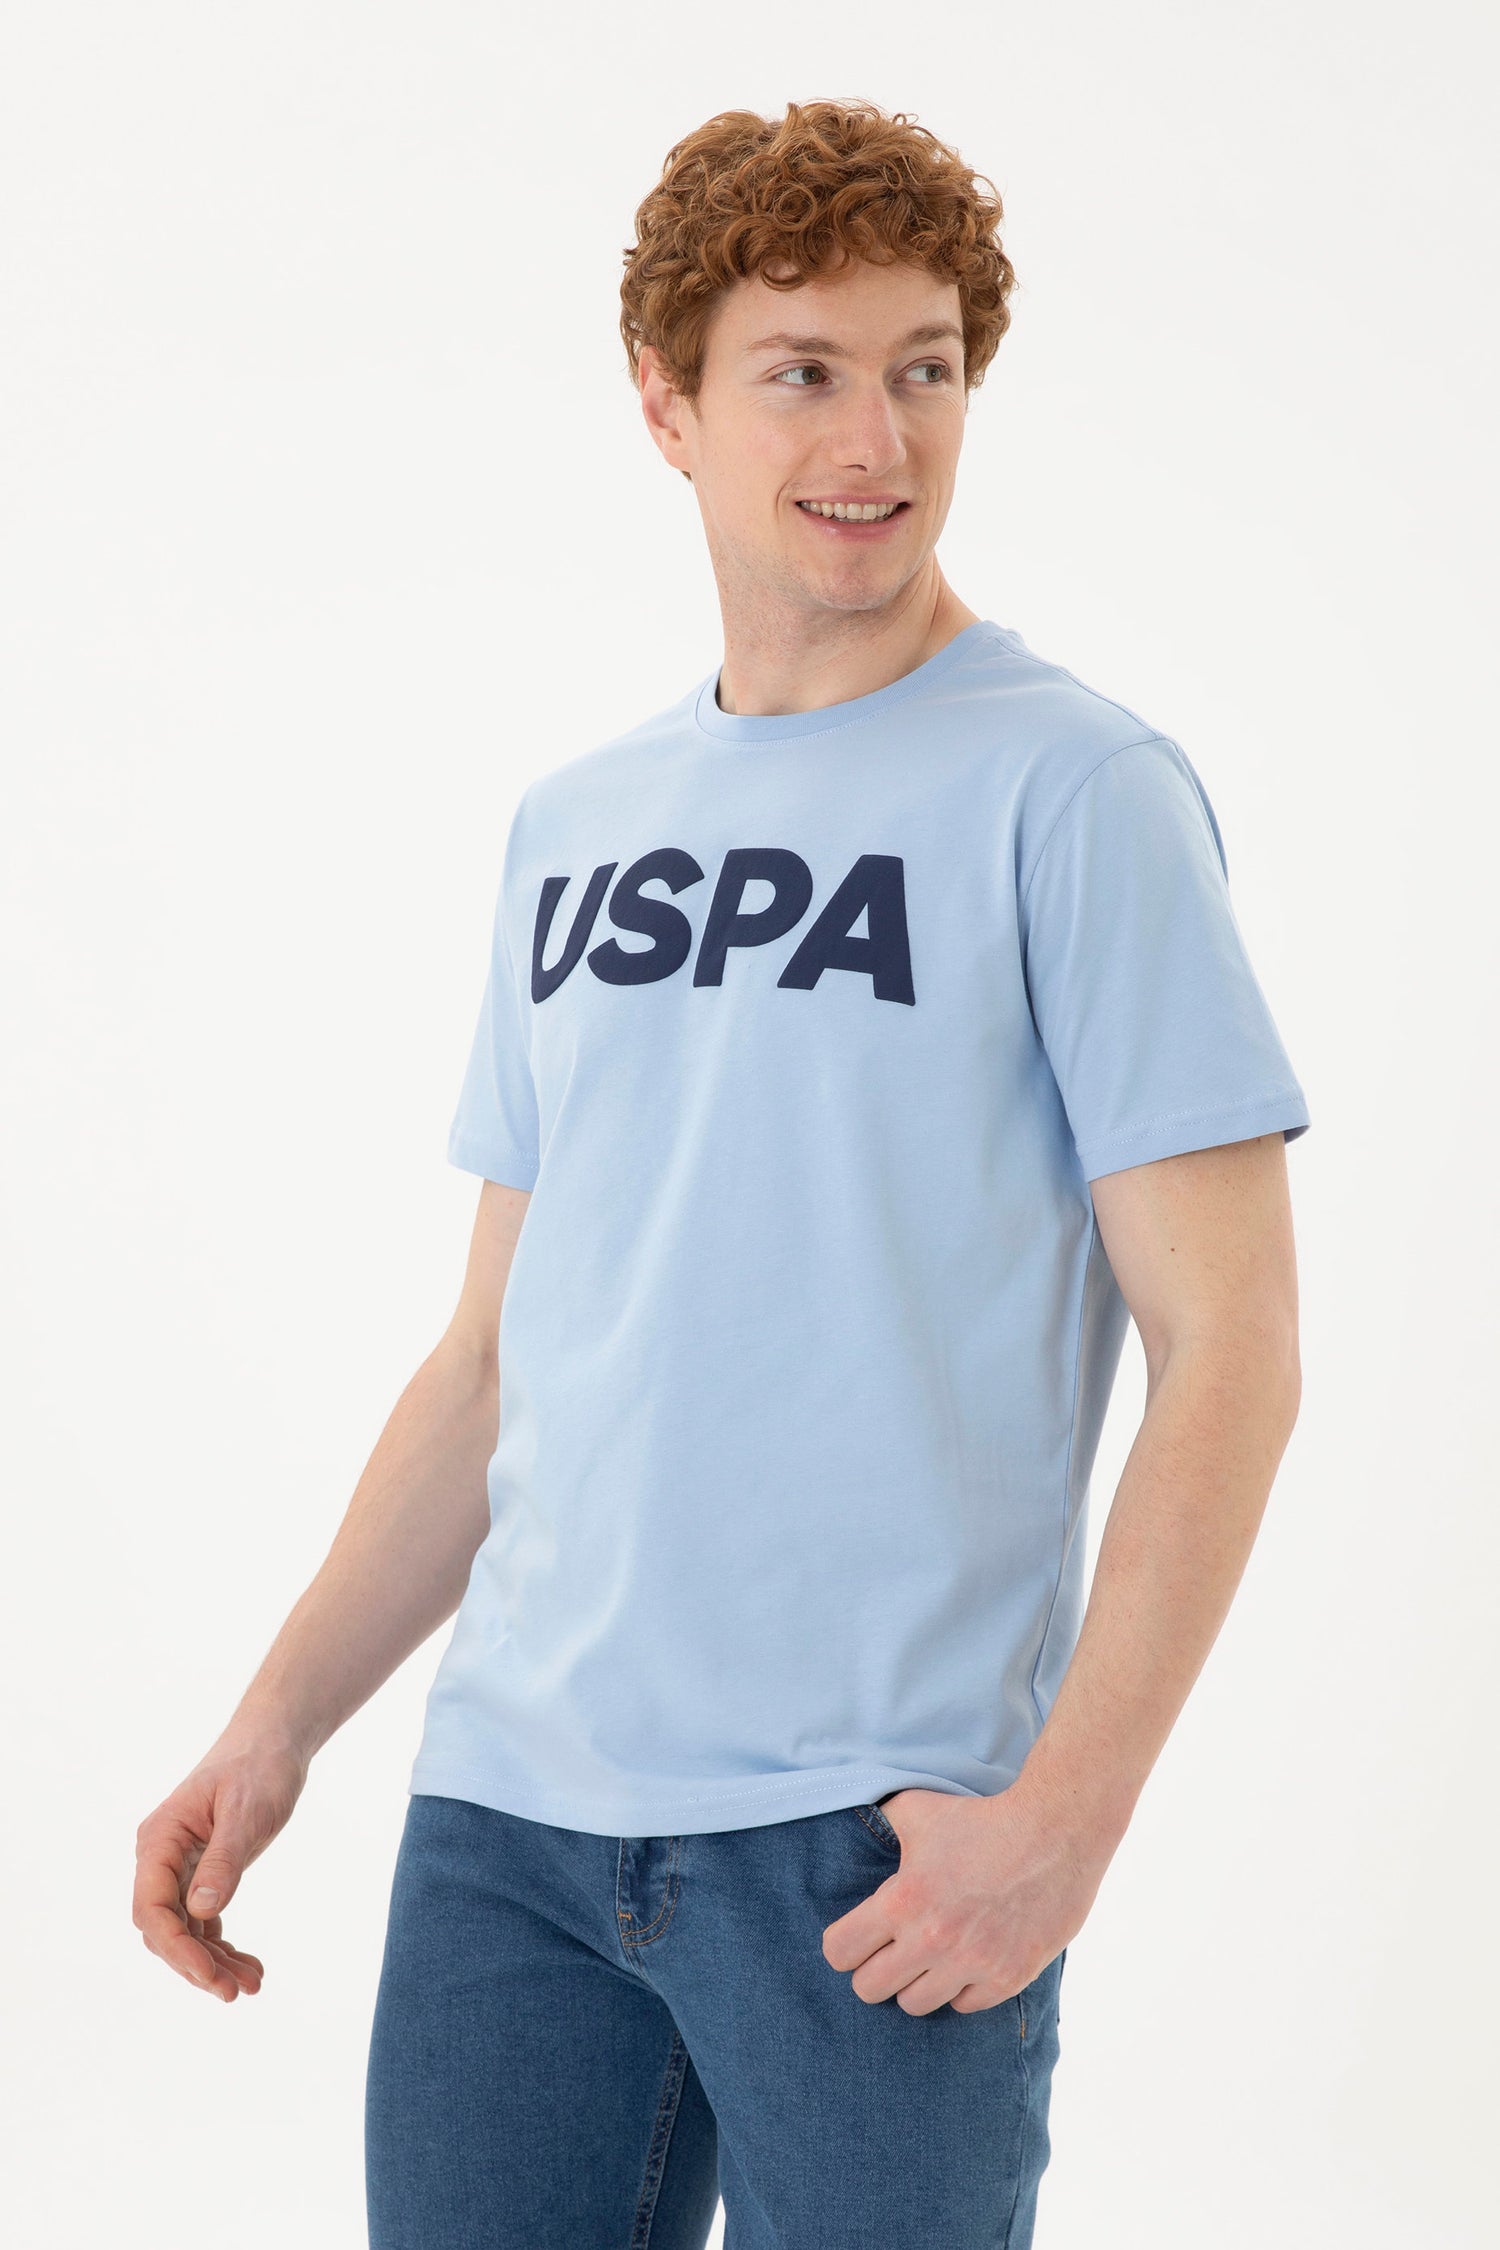 Round Neck T-Shirt With Uspa Logo_G081SZ0110 1795459_VR003_03